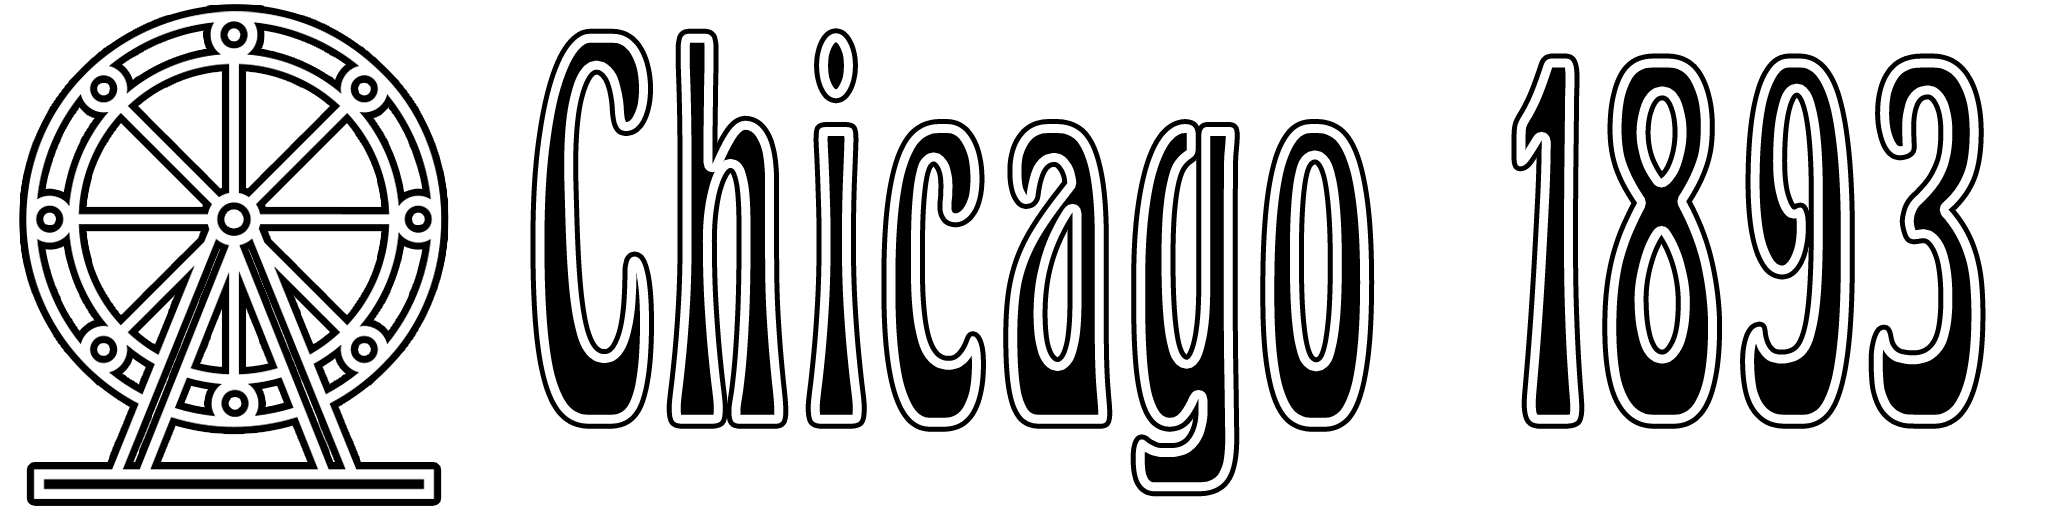 Chicago 1893 Logo